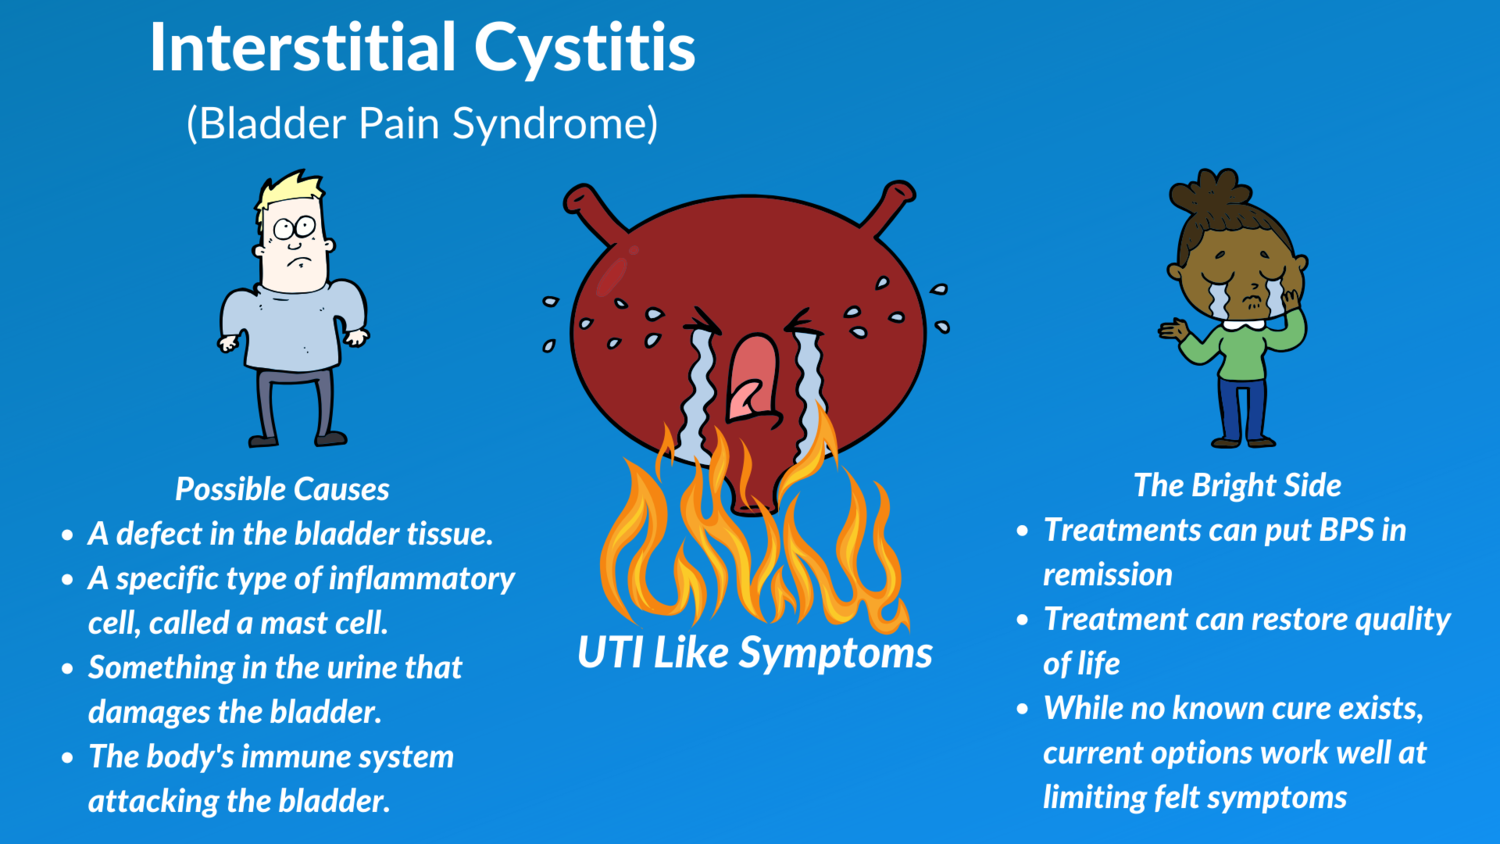 Causes of interstitial cystitis